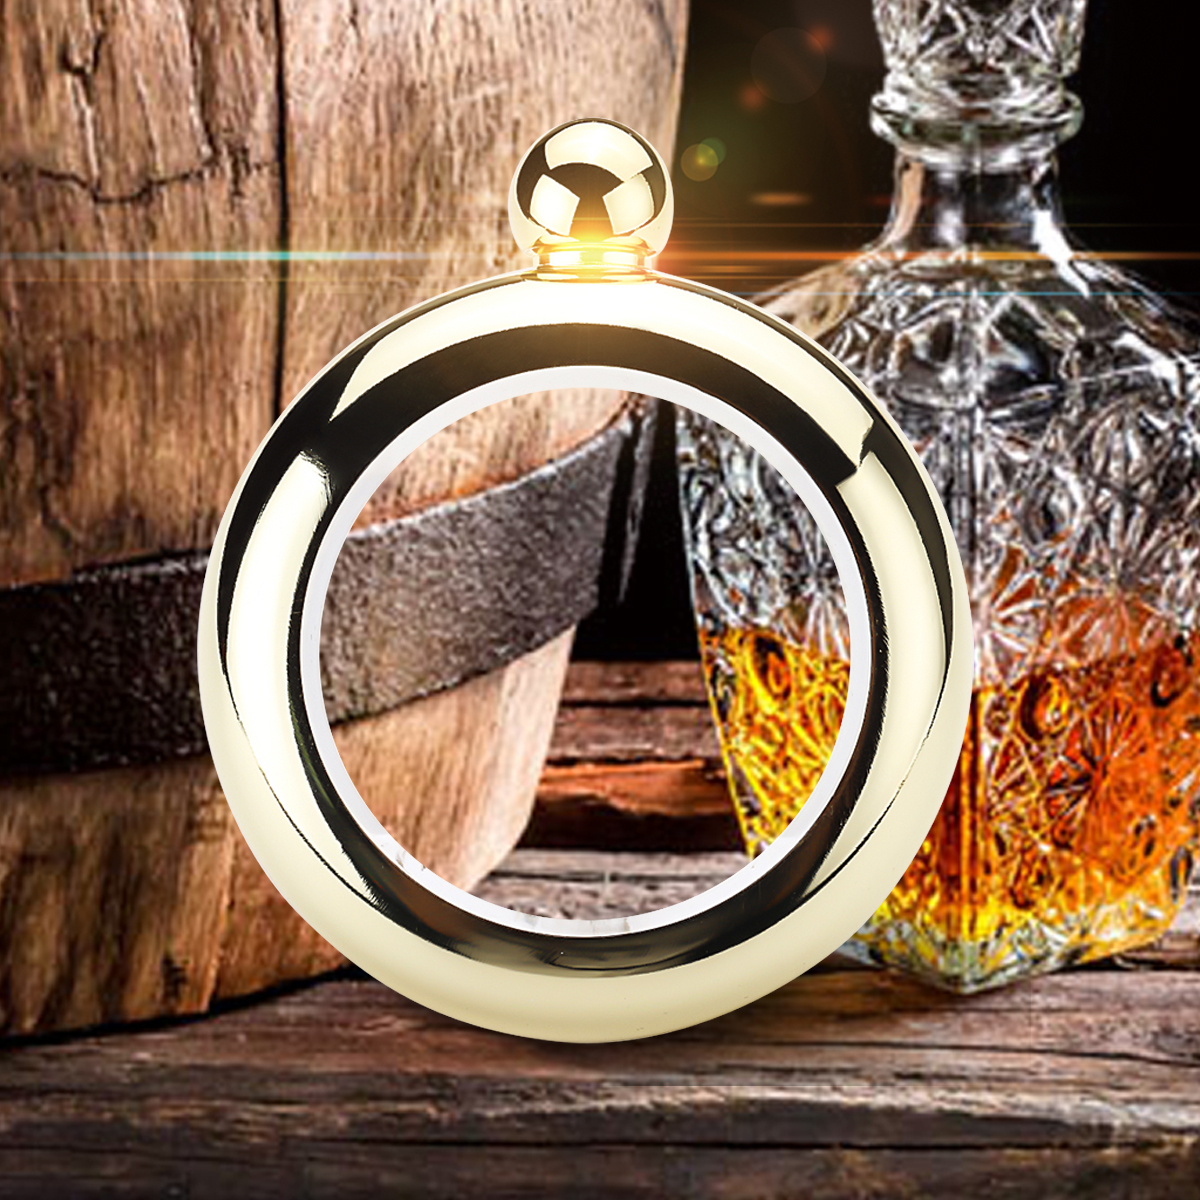 Bracelet-Bangle-Flask-Drinking-Stainless-Steel-Whiskey-Hidden-Hip-Flasket-Jewelry-Gadget-1235443-2